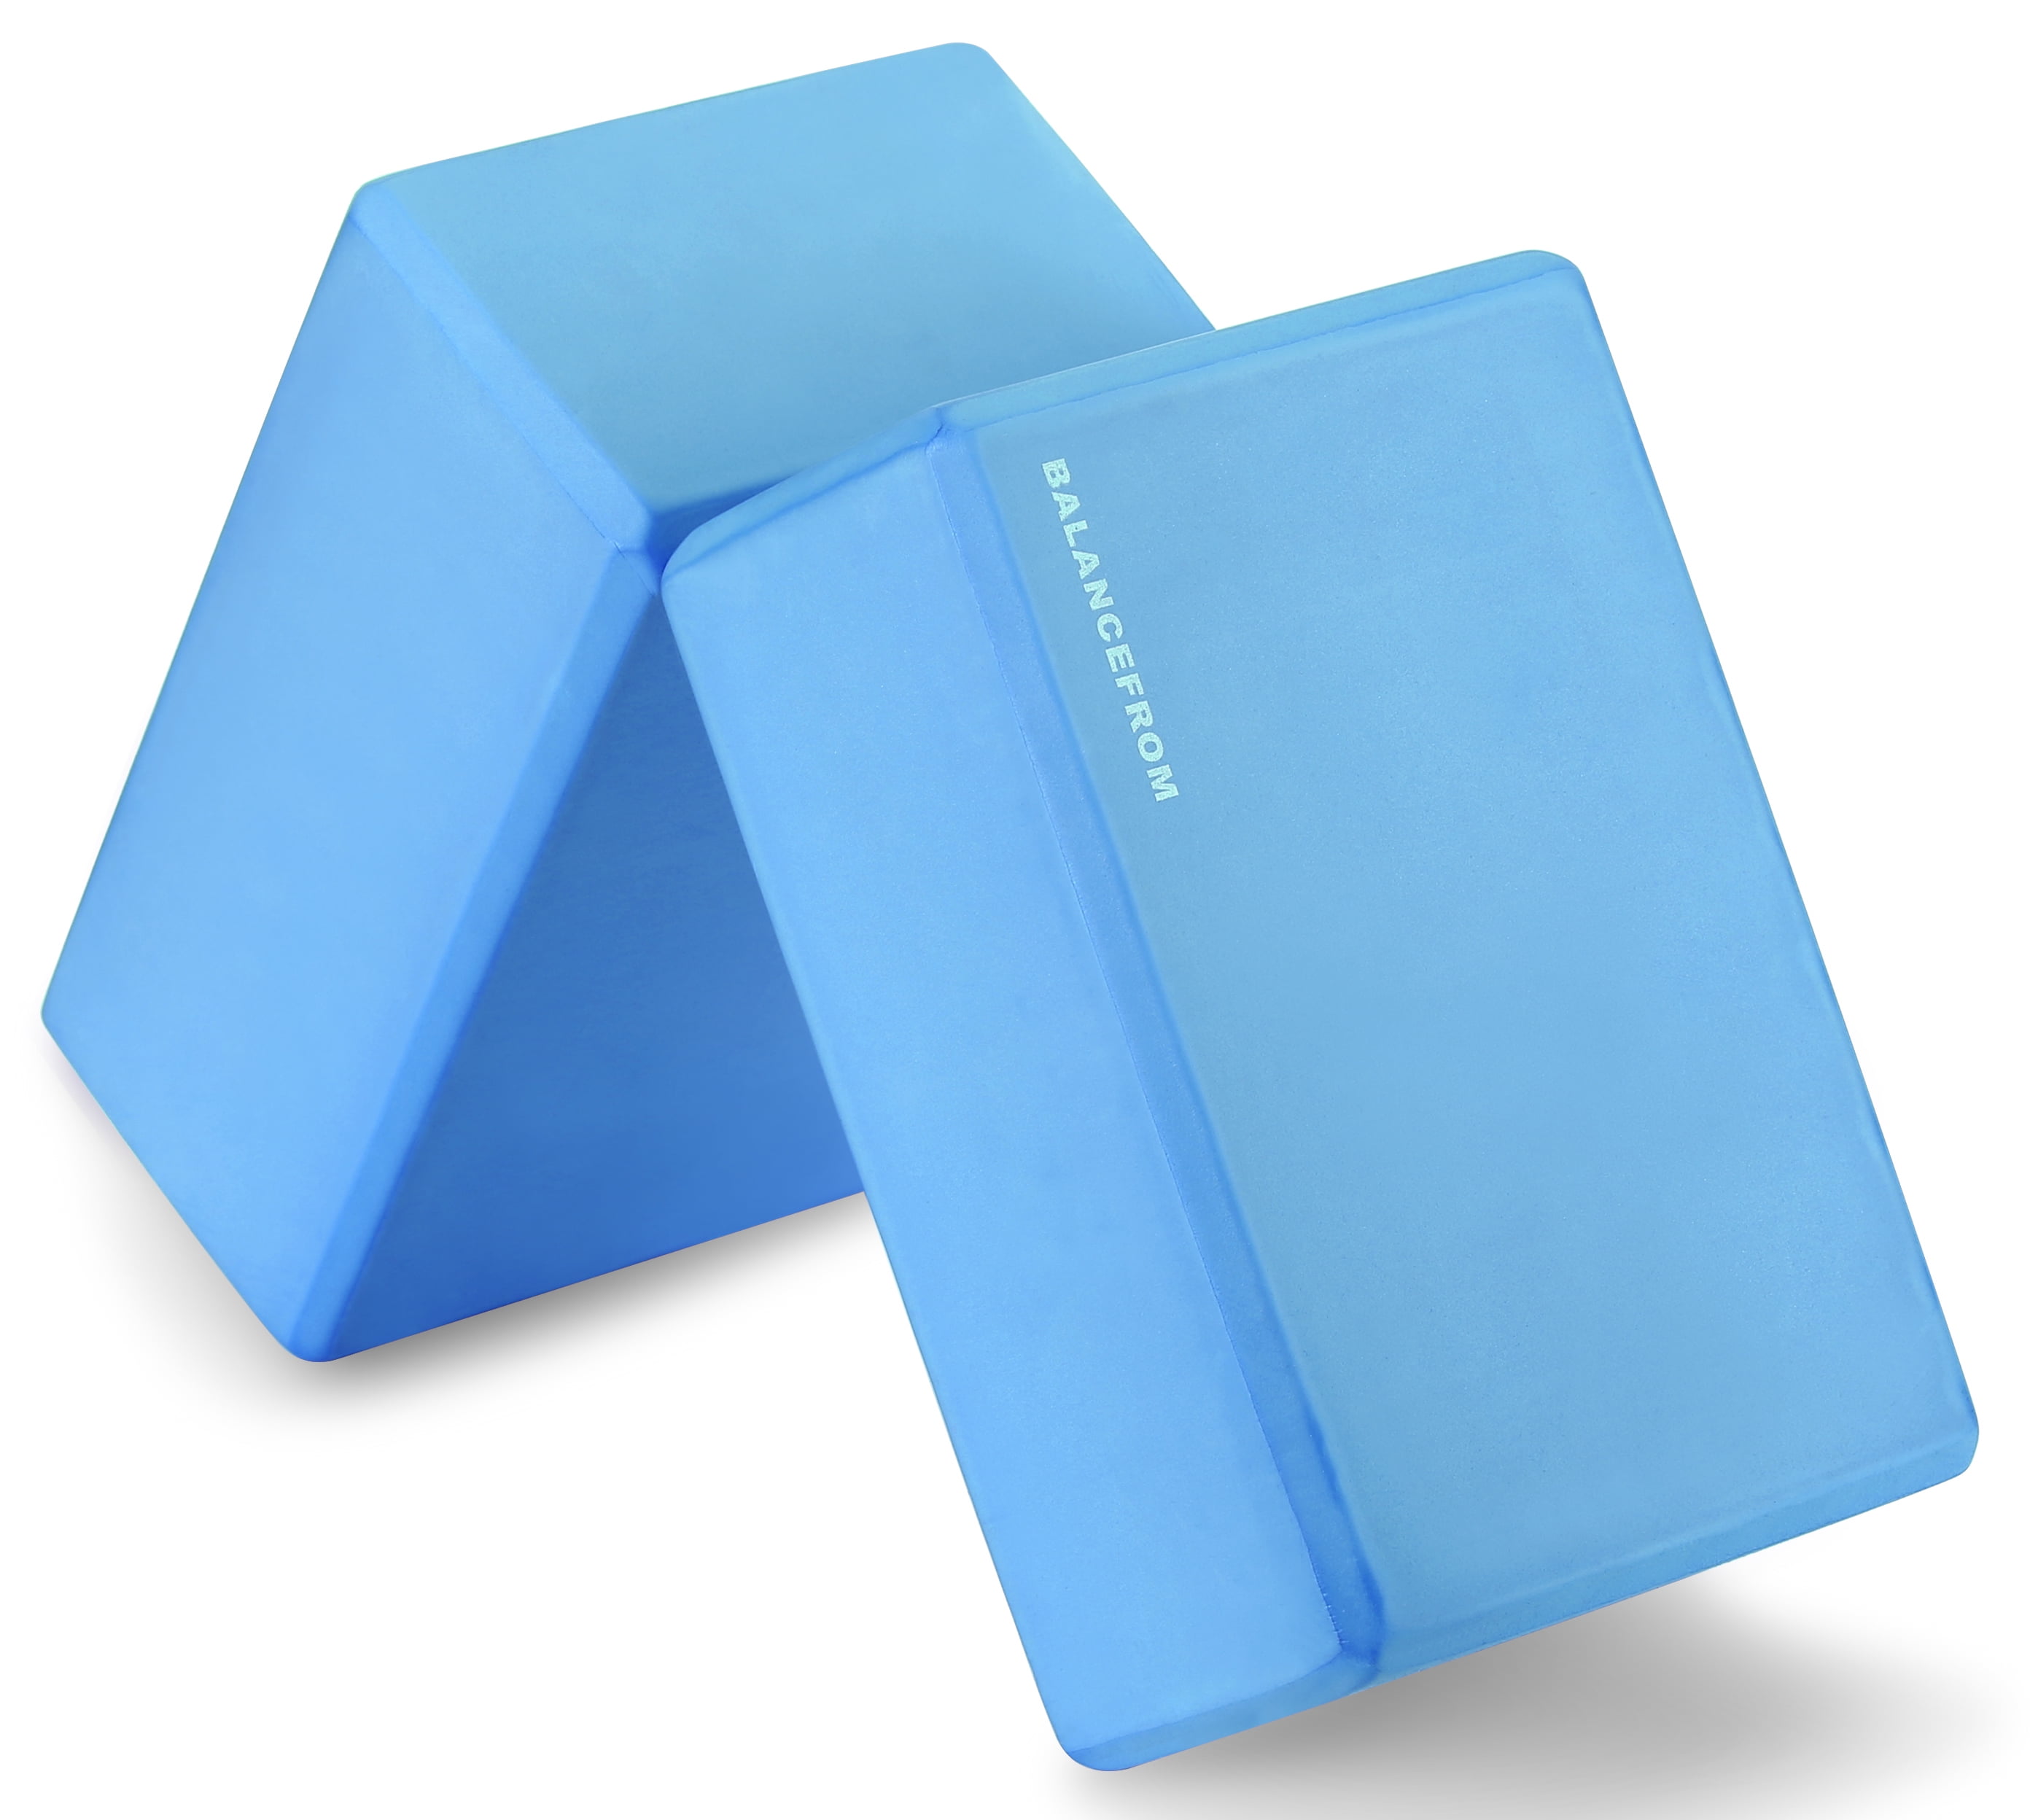 Large High Density Blue Foam Yoga Block 9 x 6 x 4 –